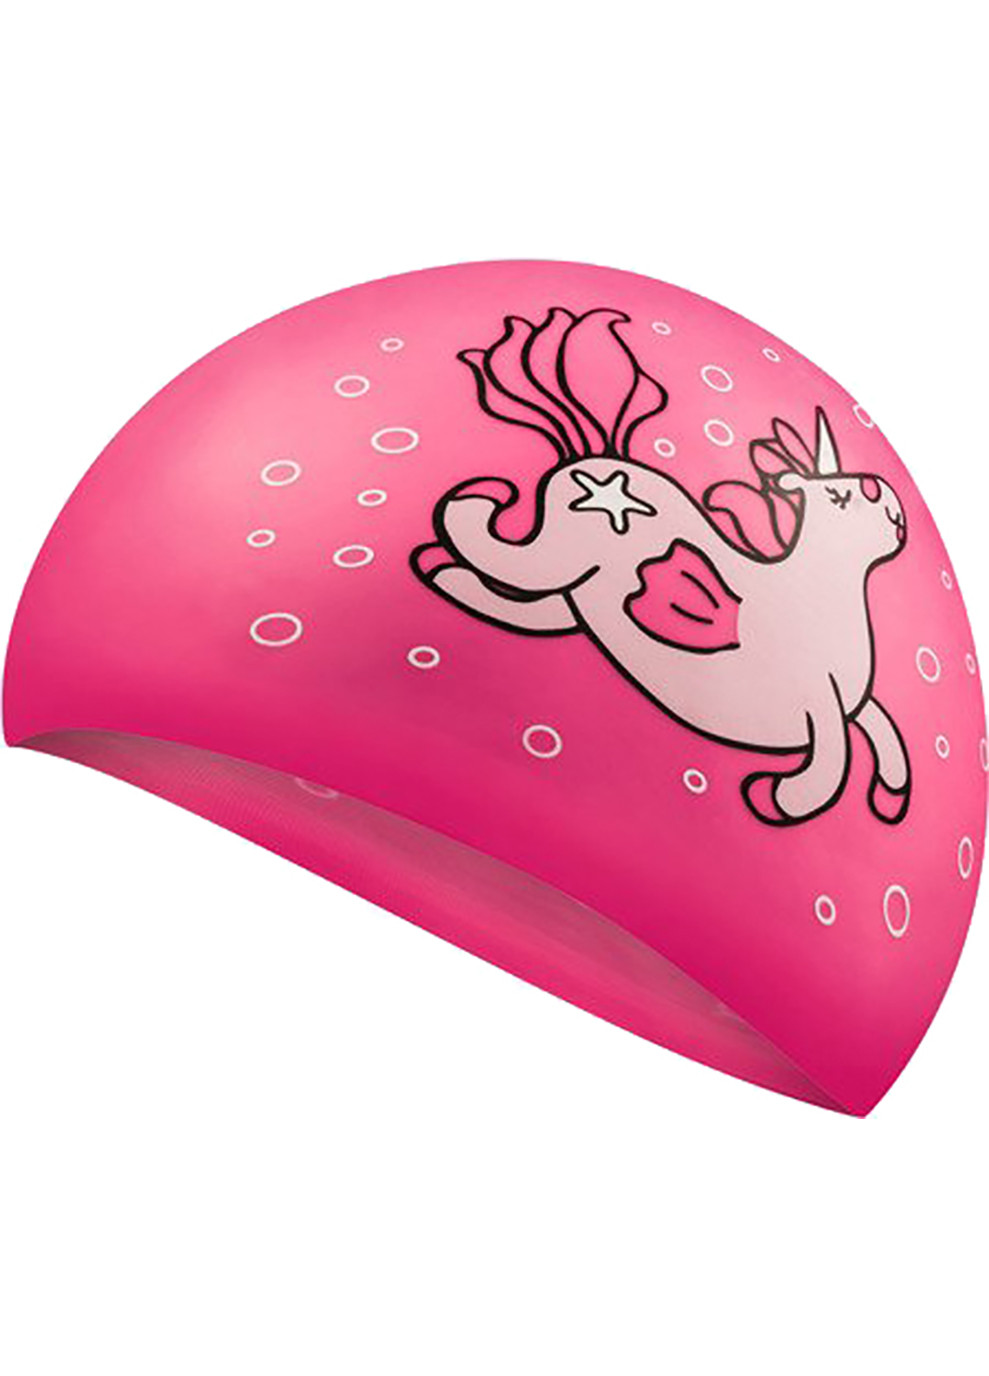 Шапка для плавания Aquaspeed KIDDIE Unicorn 6880 (142-Unicorn) розовая детская OSFM Aqua Speed (258186680)